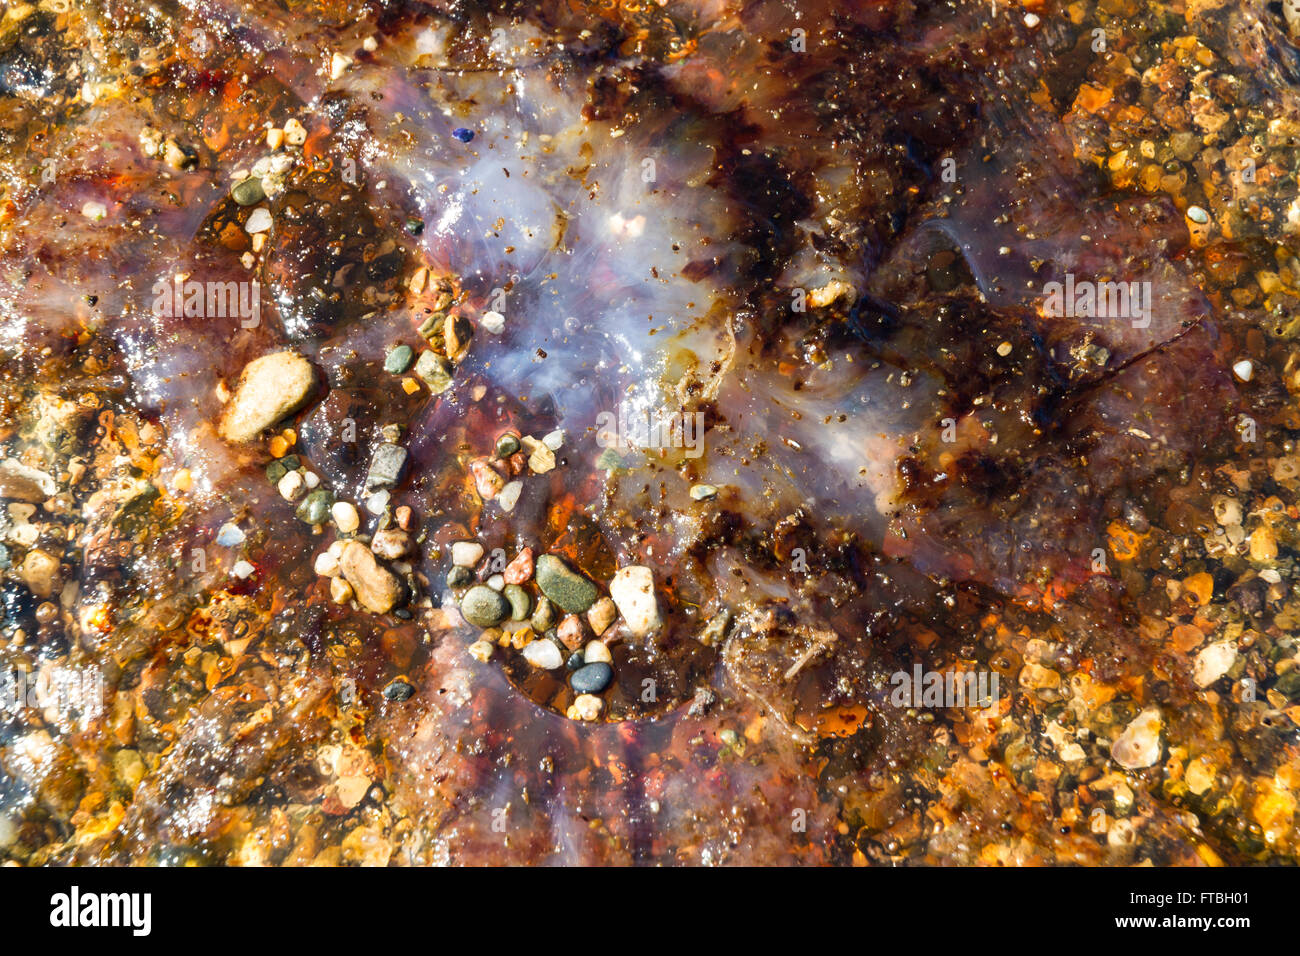 Quallen oder Jellie, Teil des Phylum Cnidaria angespült am Kiesstrand. Stockfoto